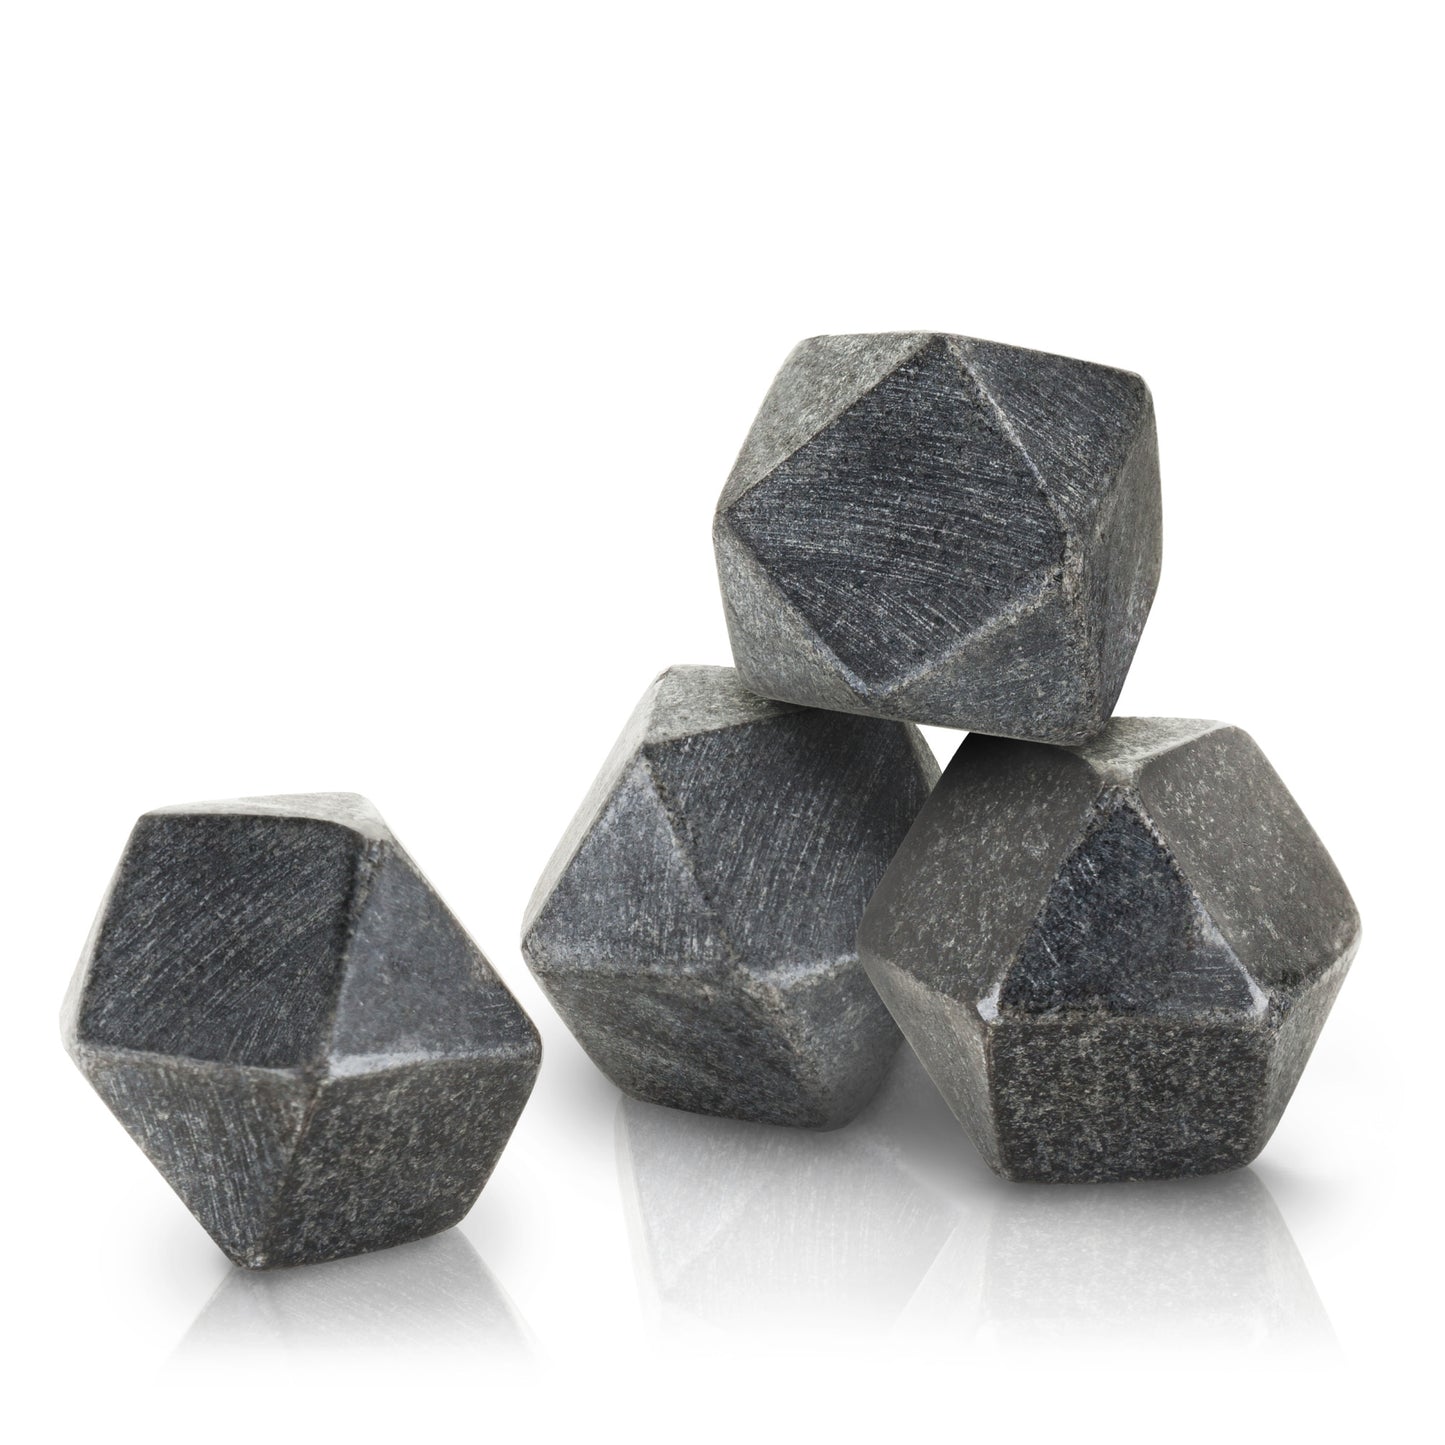 Glacier Rocks® Hexagonal Basalt Stones by Viski®